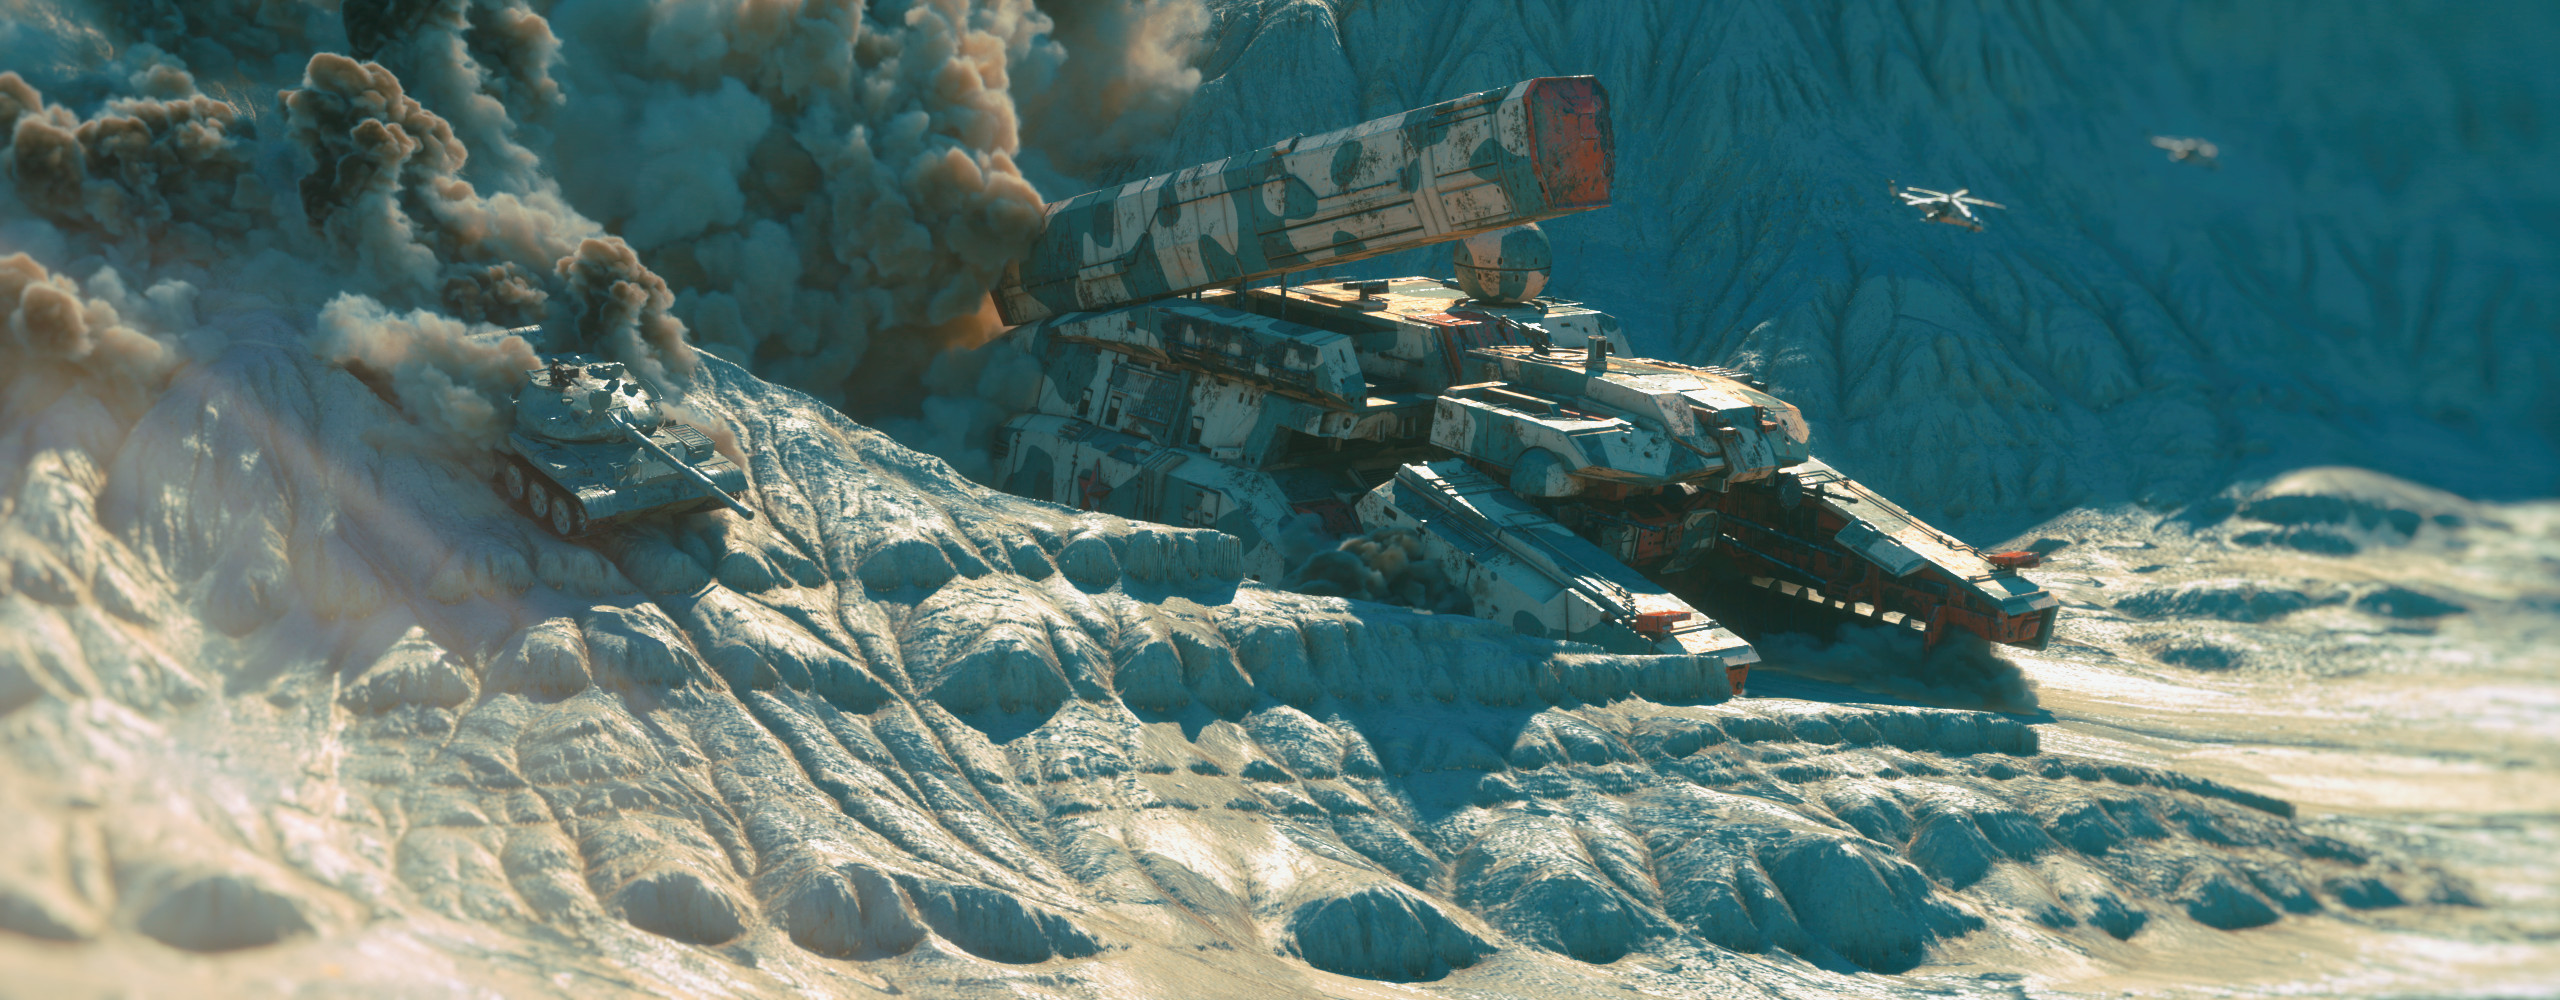 Metal Gear Video Games Video Game Art Digital Art Tank Vehicle Ben Nicholas 2560x1000